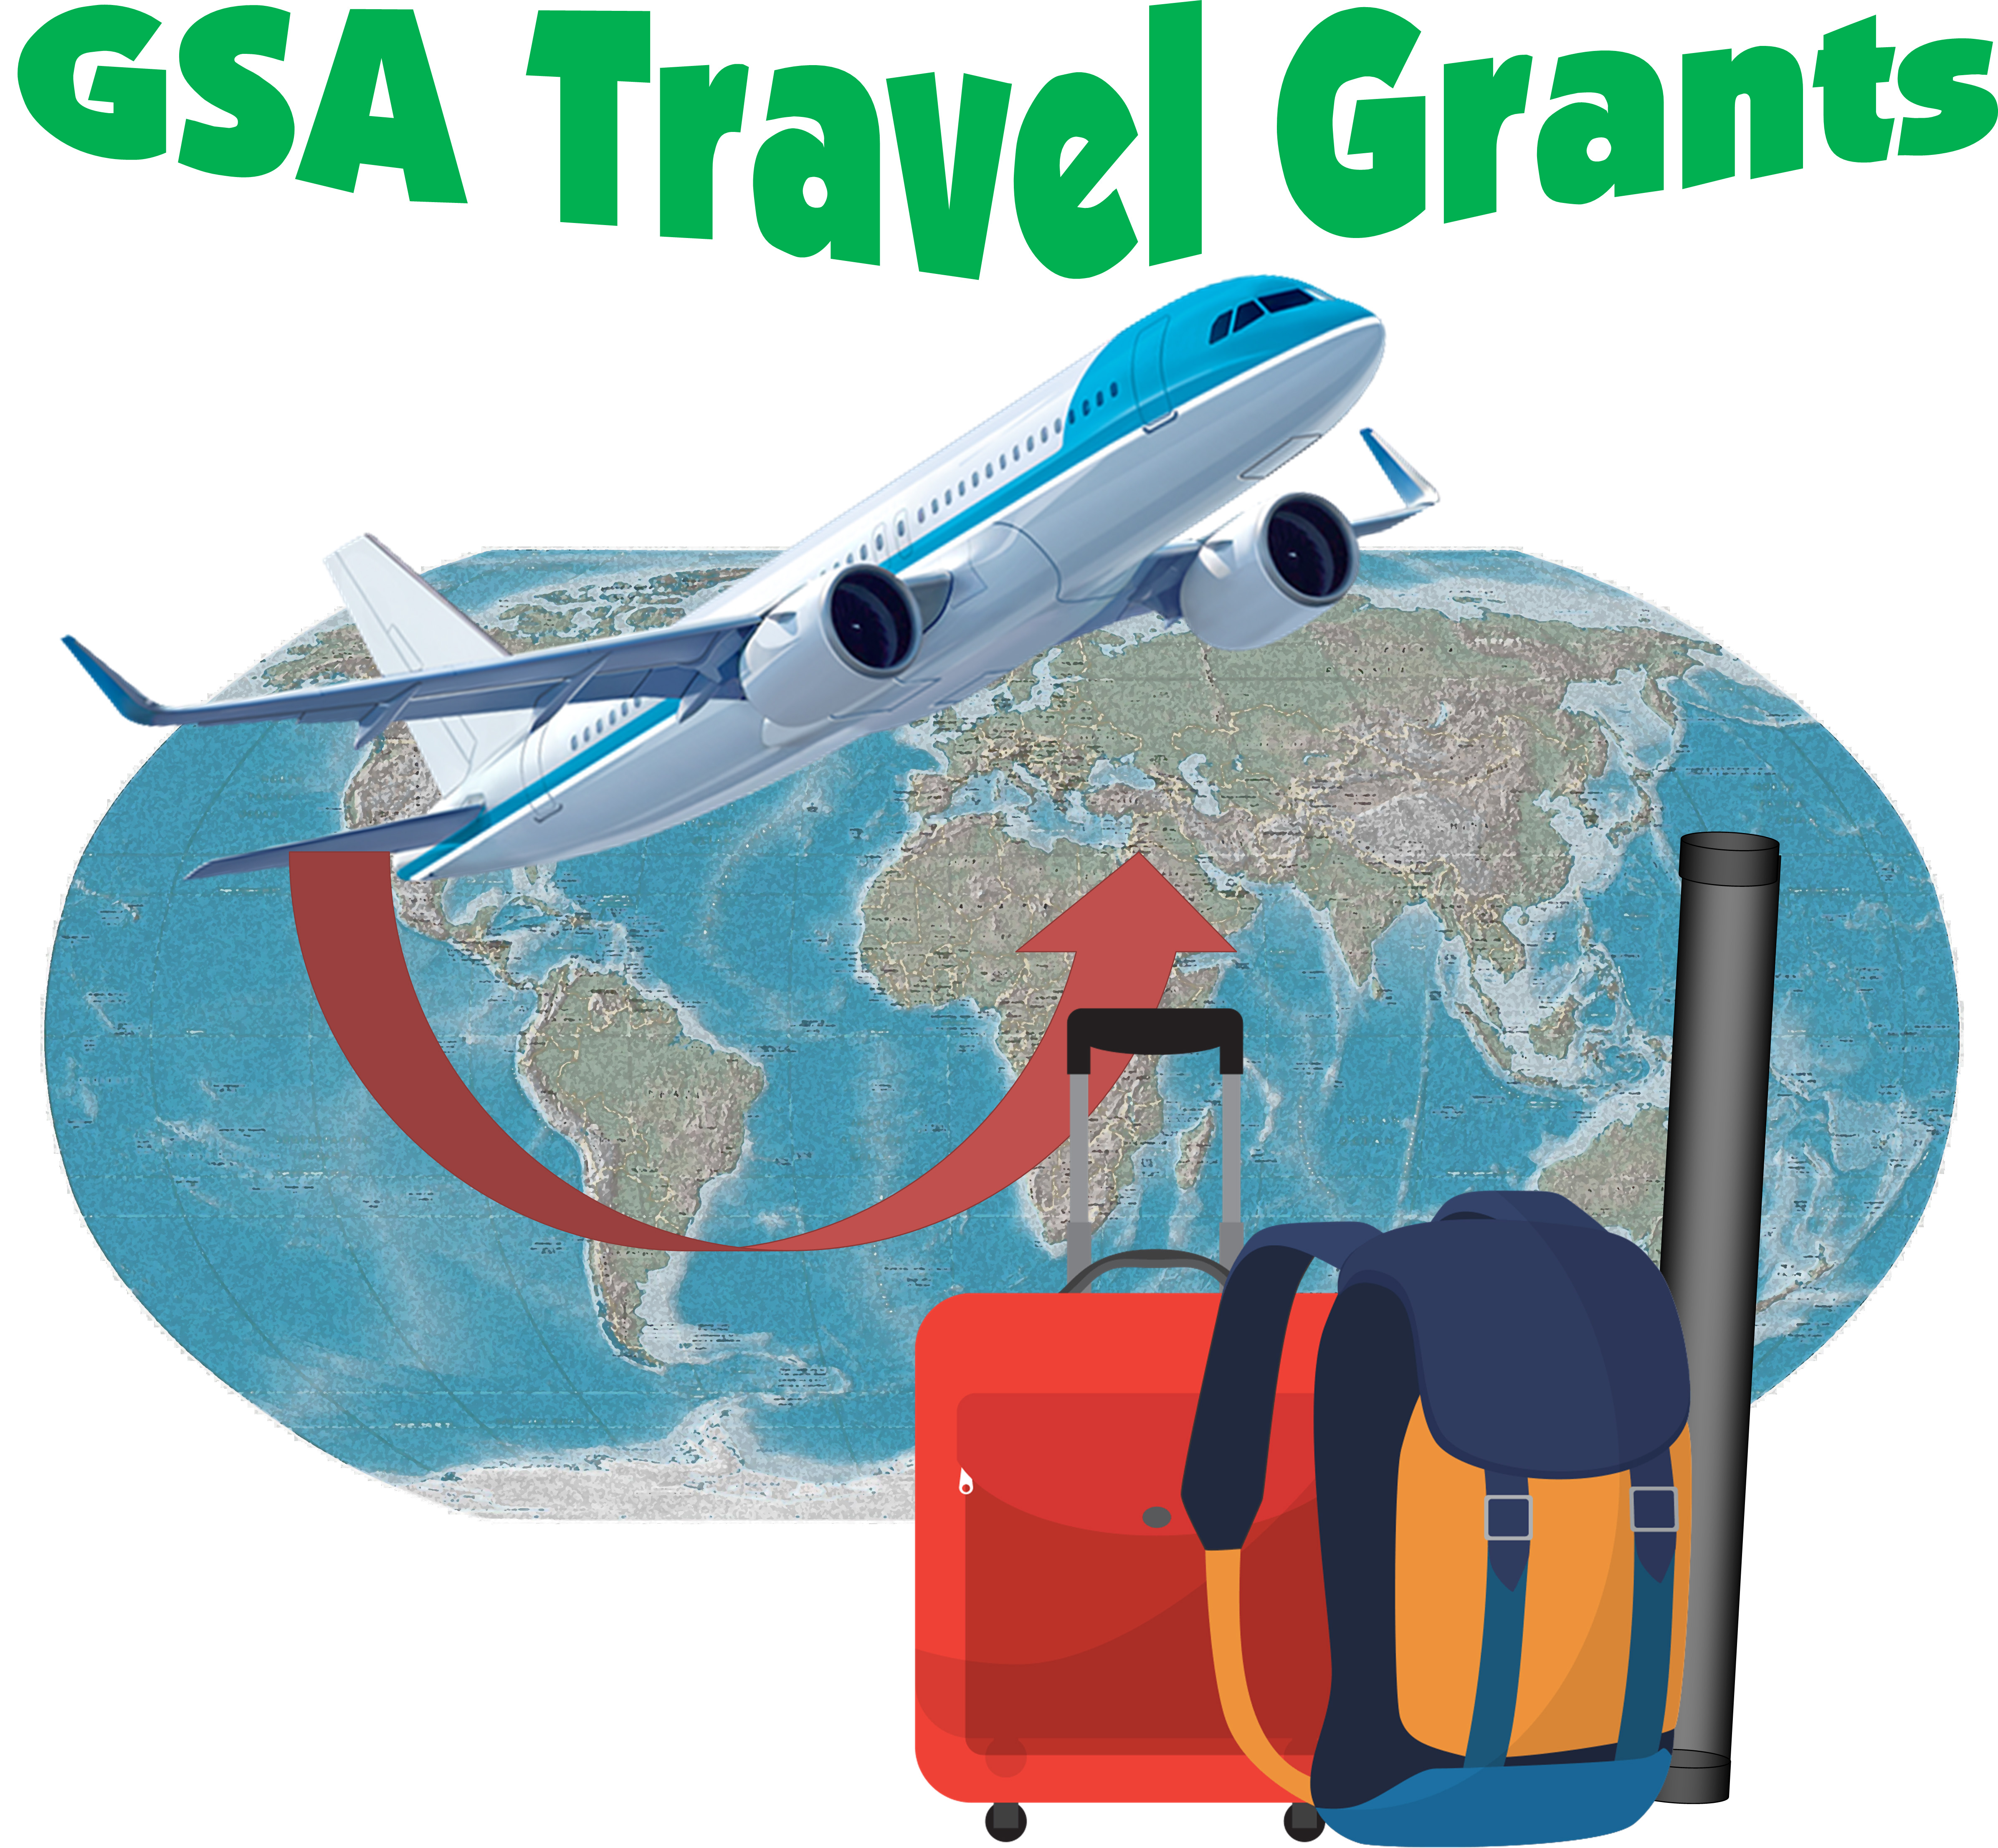 student grants for travel